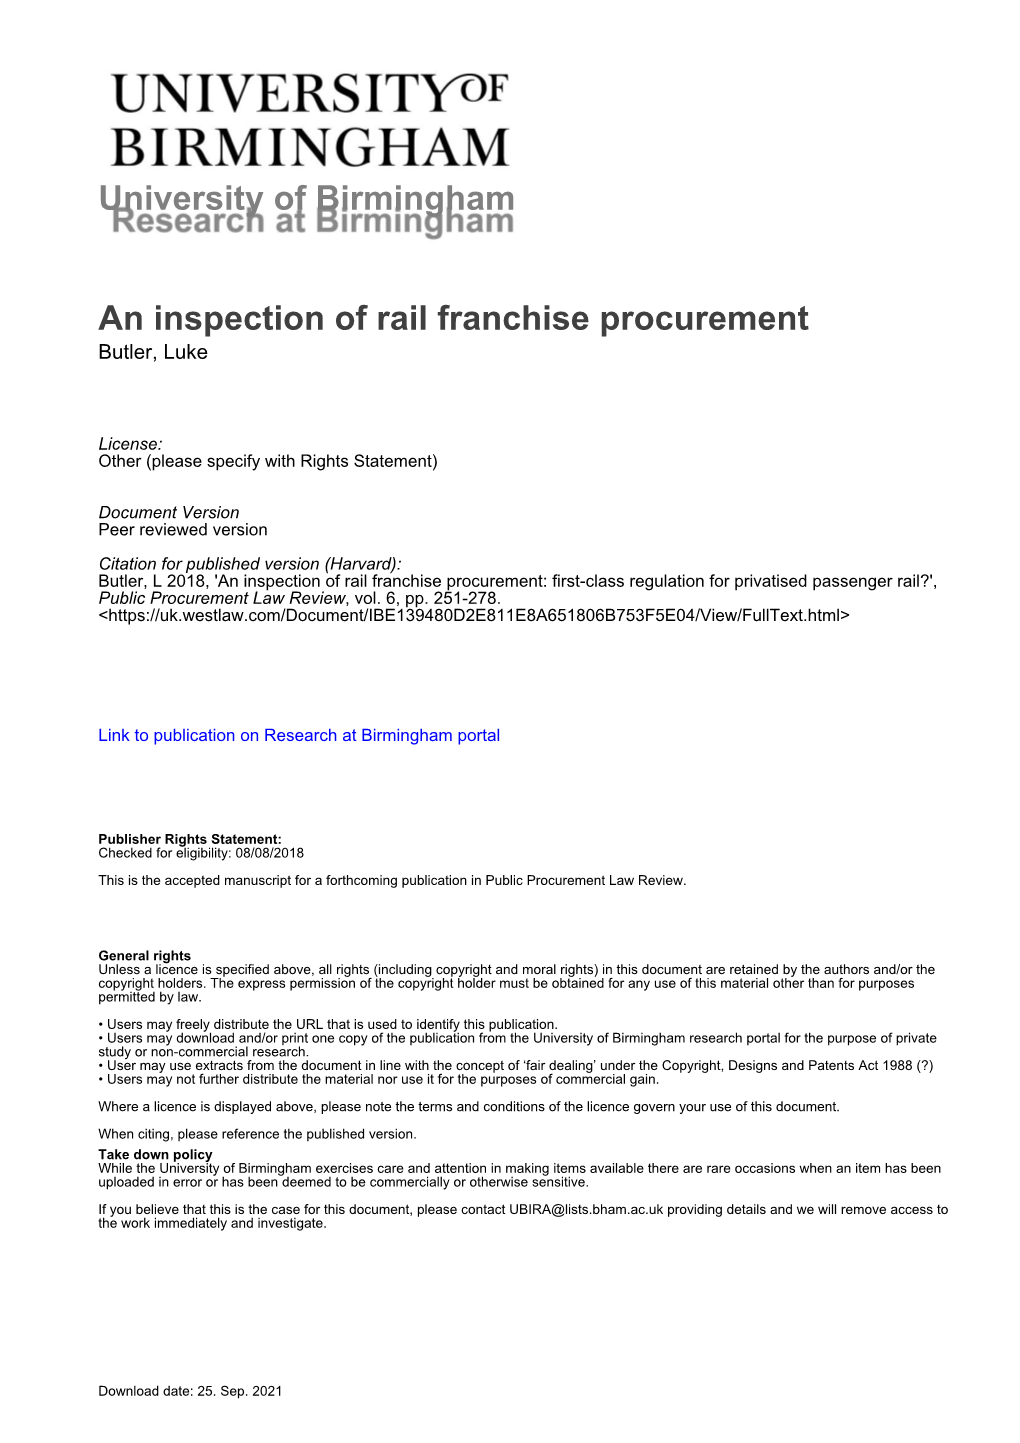 University of Birmingham an Inspection of Rail Franchise